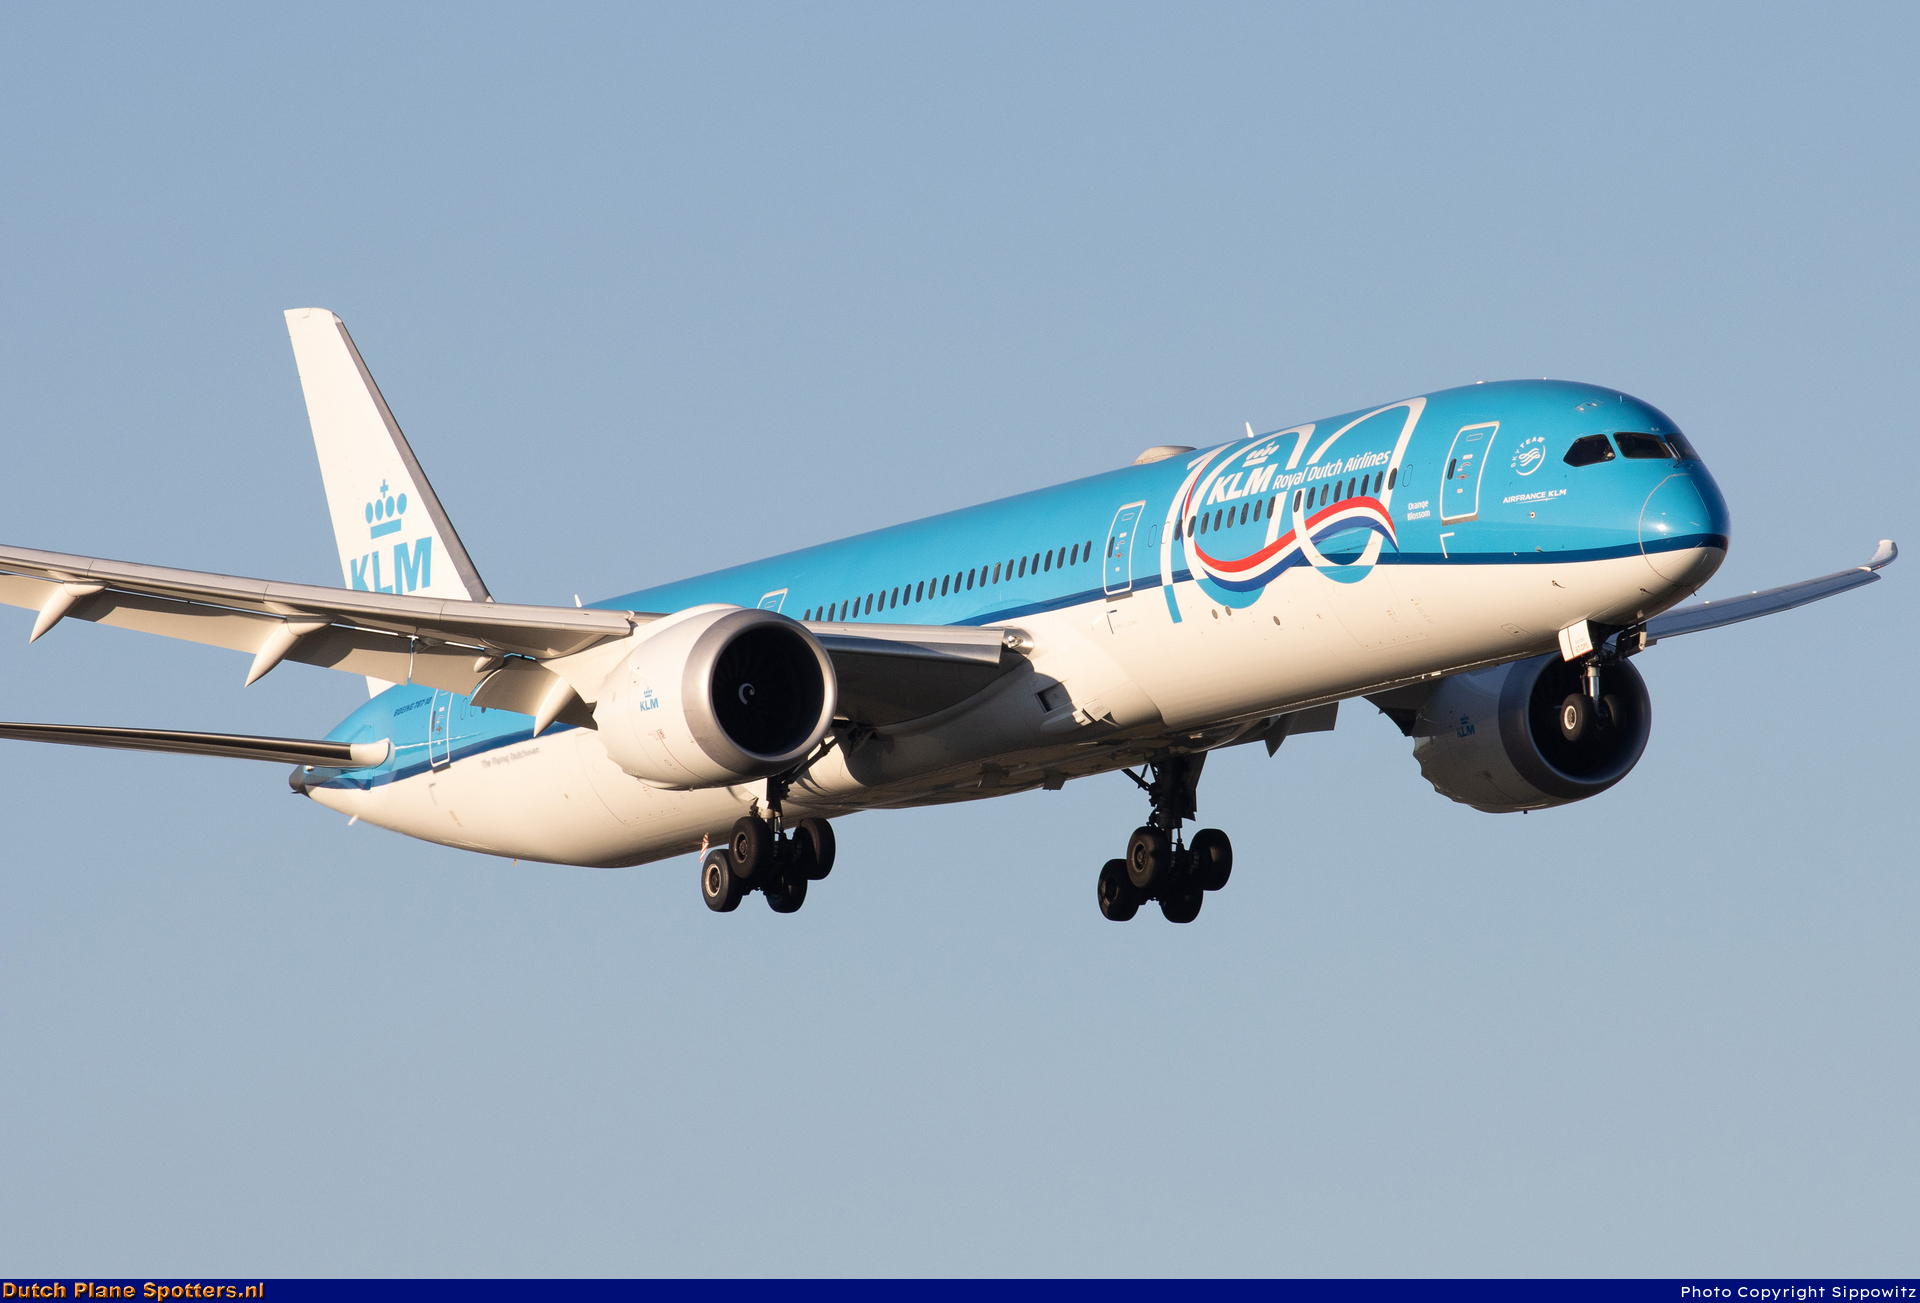 PH-BKA Boeing 787-10 Dreamliner KLM Royal Dutch Airlines by Sippowitz